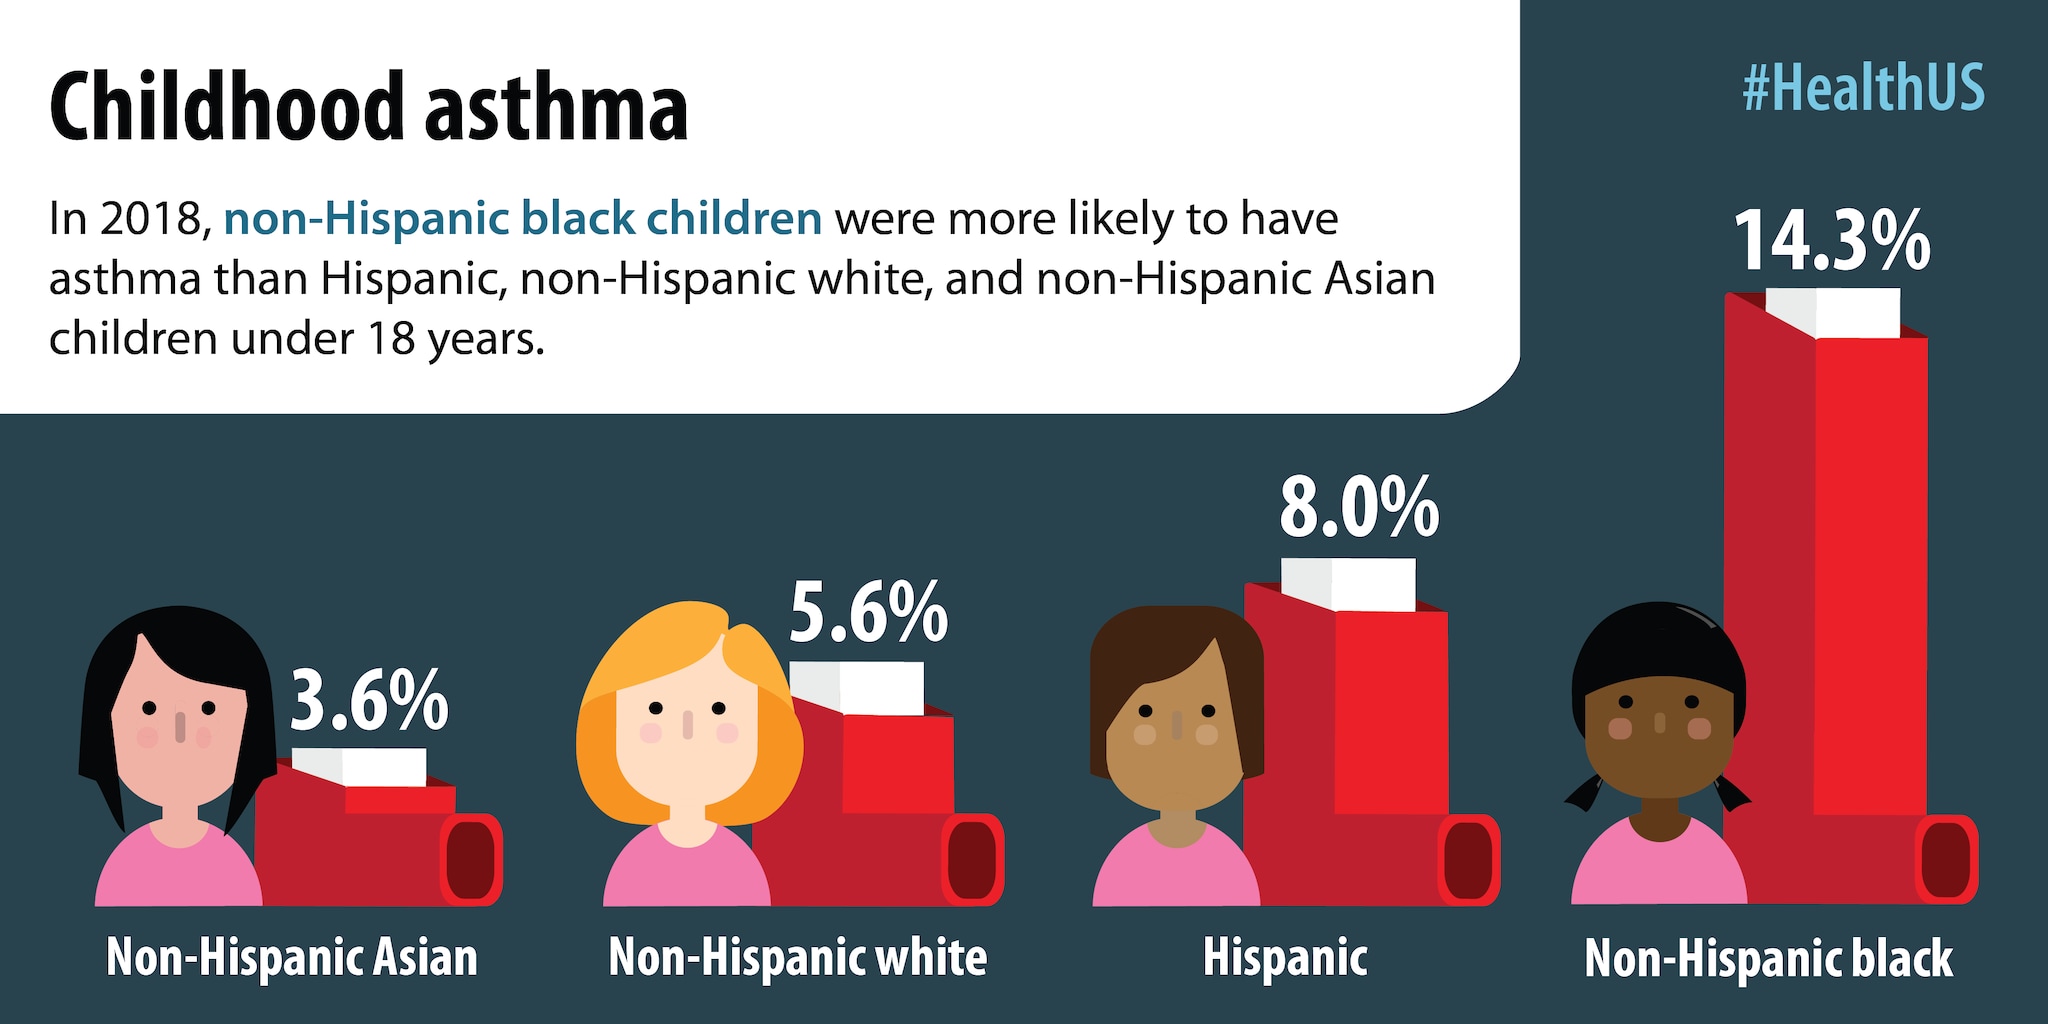 In 2018, non-Hispanic black children were more likely to have asthma than Hispanic, non-Hispanic white, and non-Hispanic Asian children under 18 years.